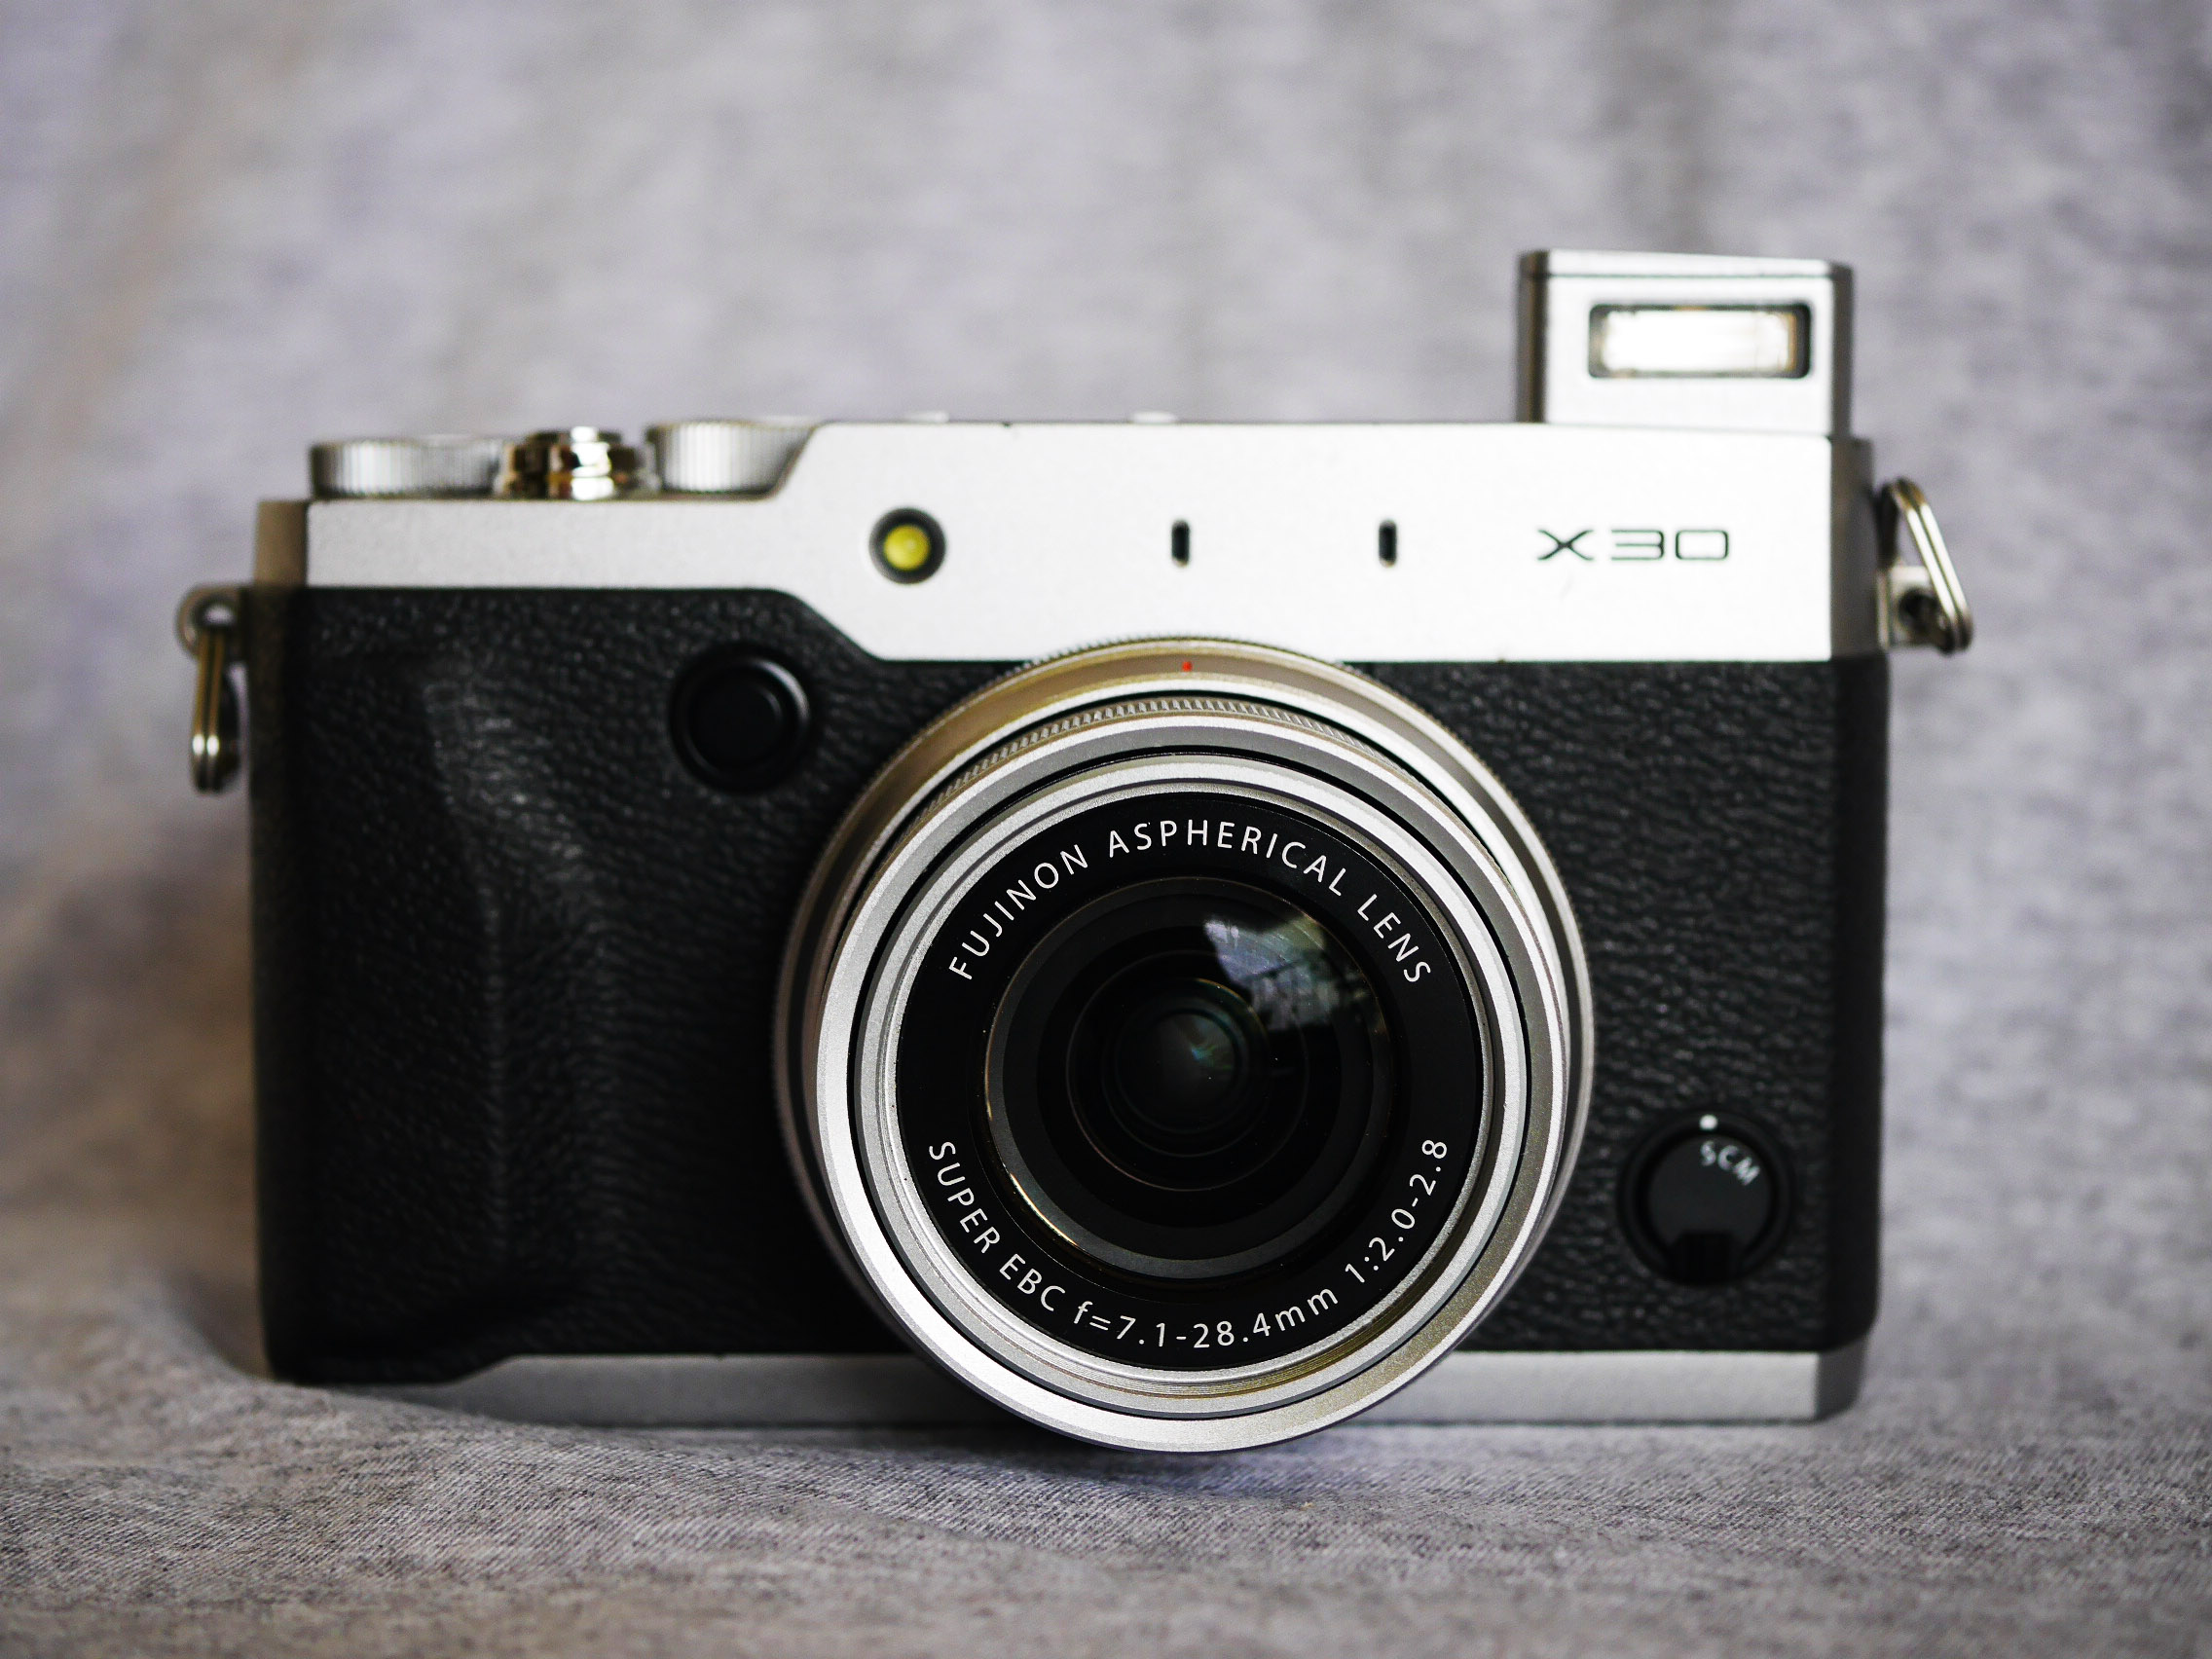 Fuji Fujifilm X30 Digital Wi-Fi Camera with F2.0-2.8 Fujinon Zoom Lens (28-112mm)